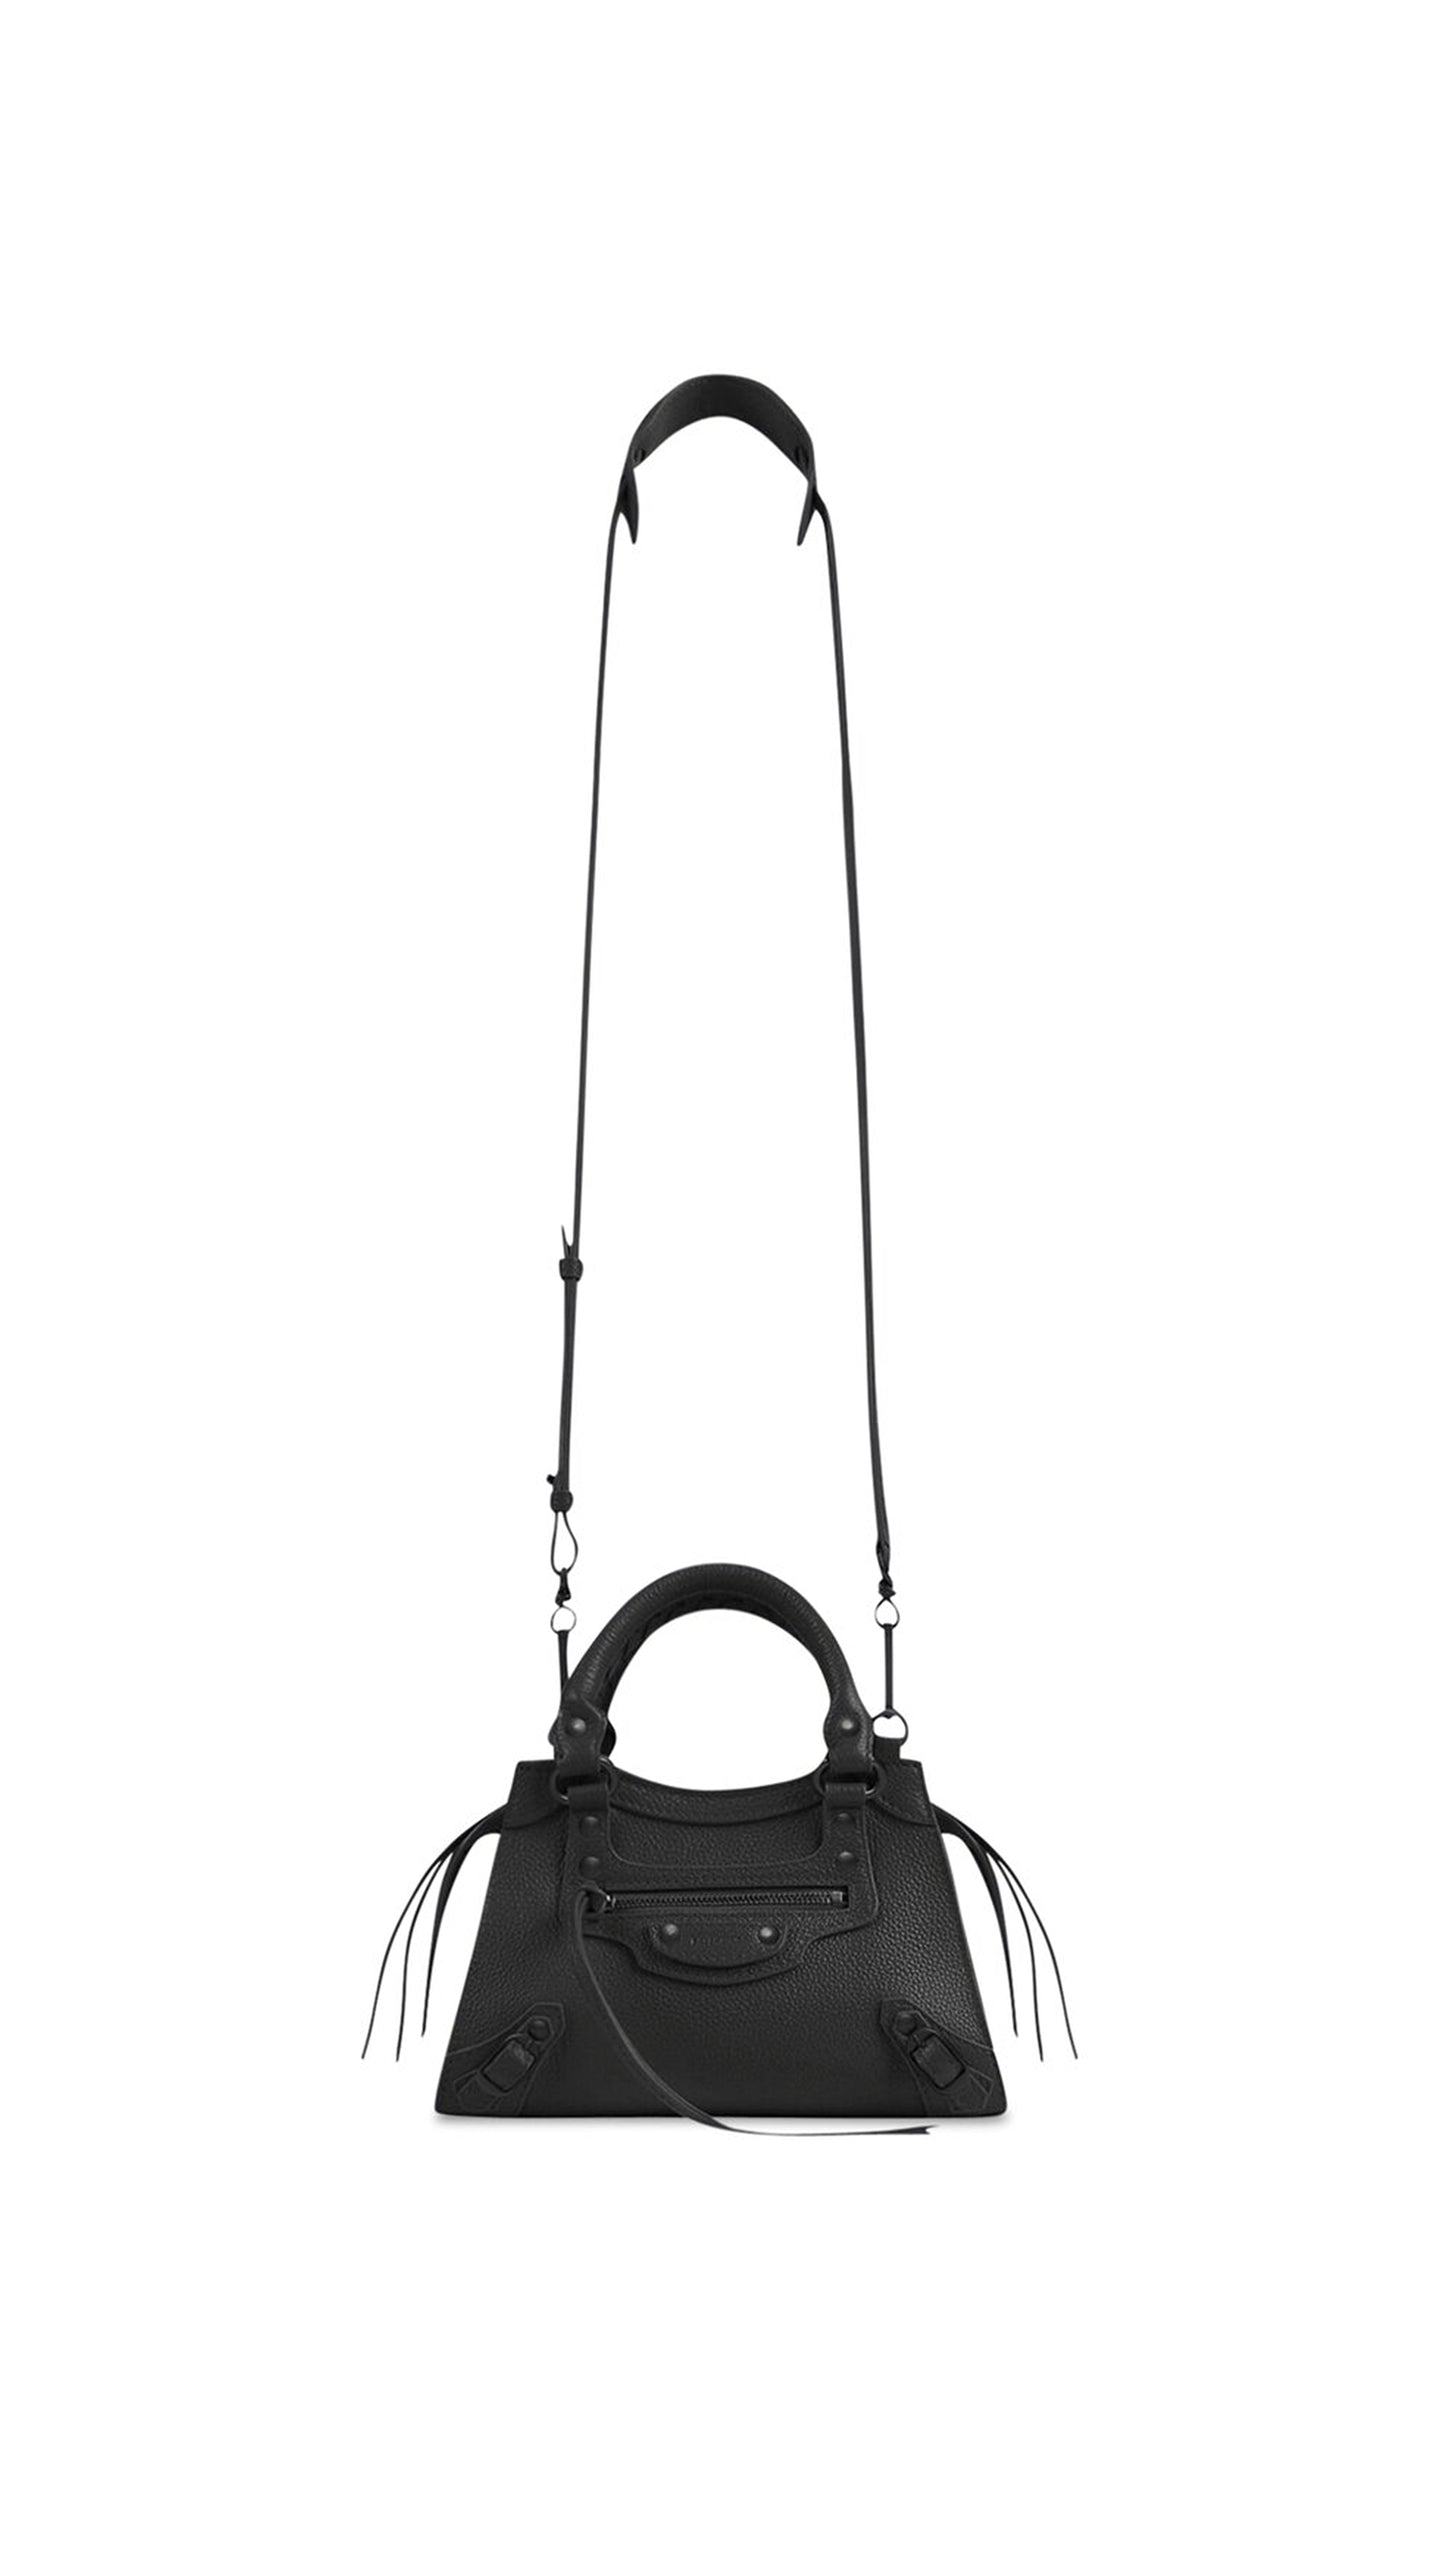 Neo Classic City Mini Handbag - Black.